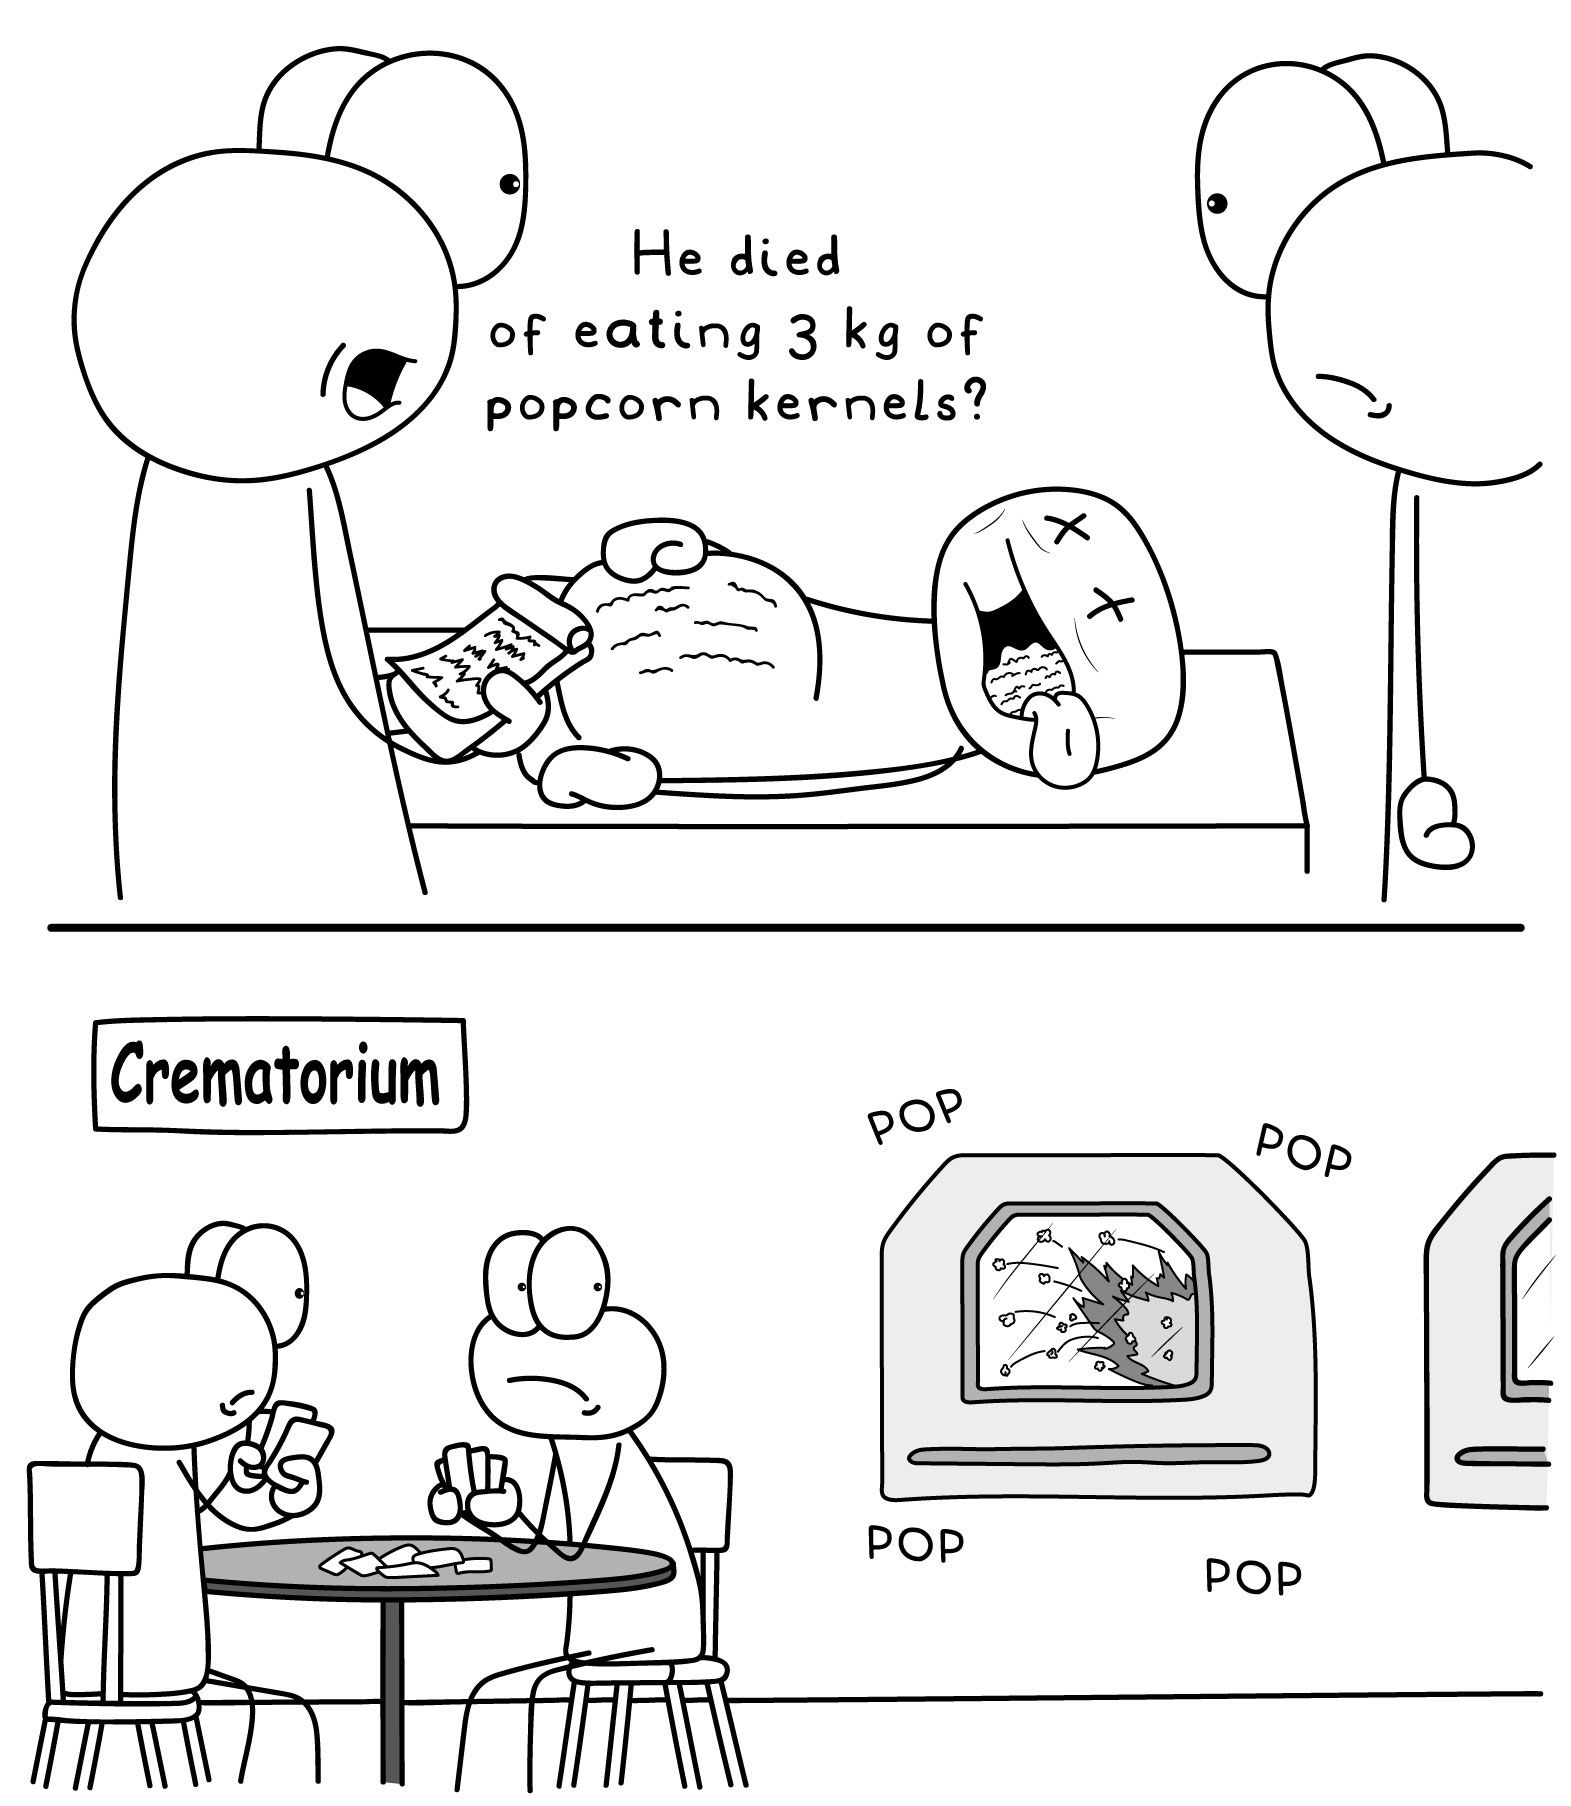 The Popcorn death